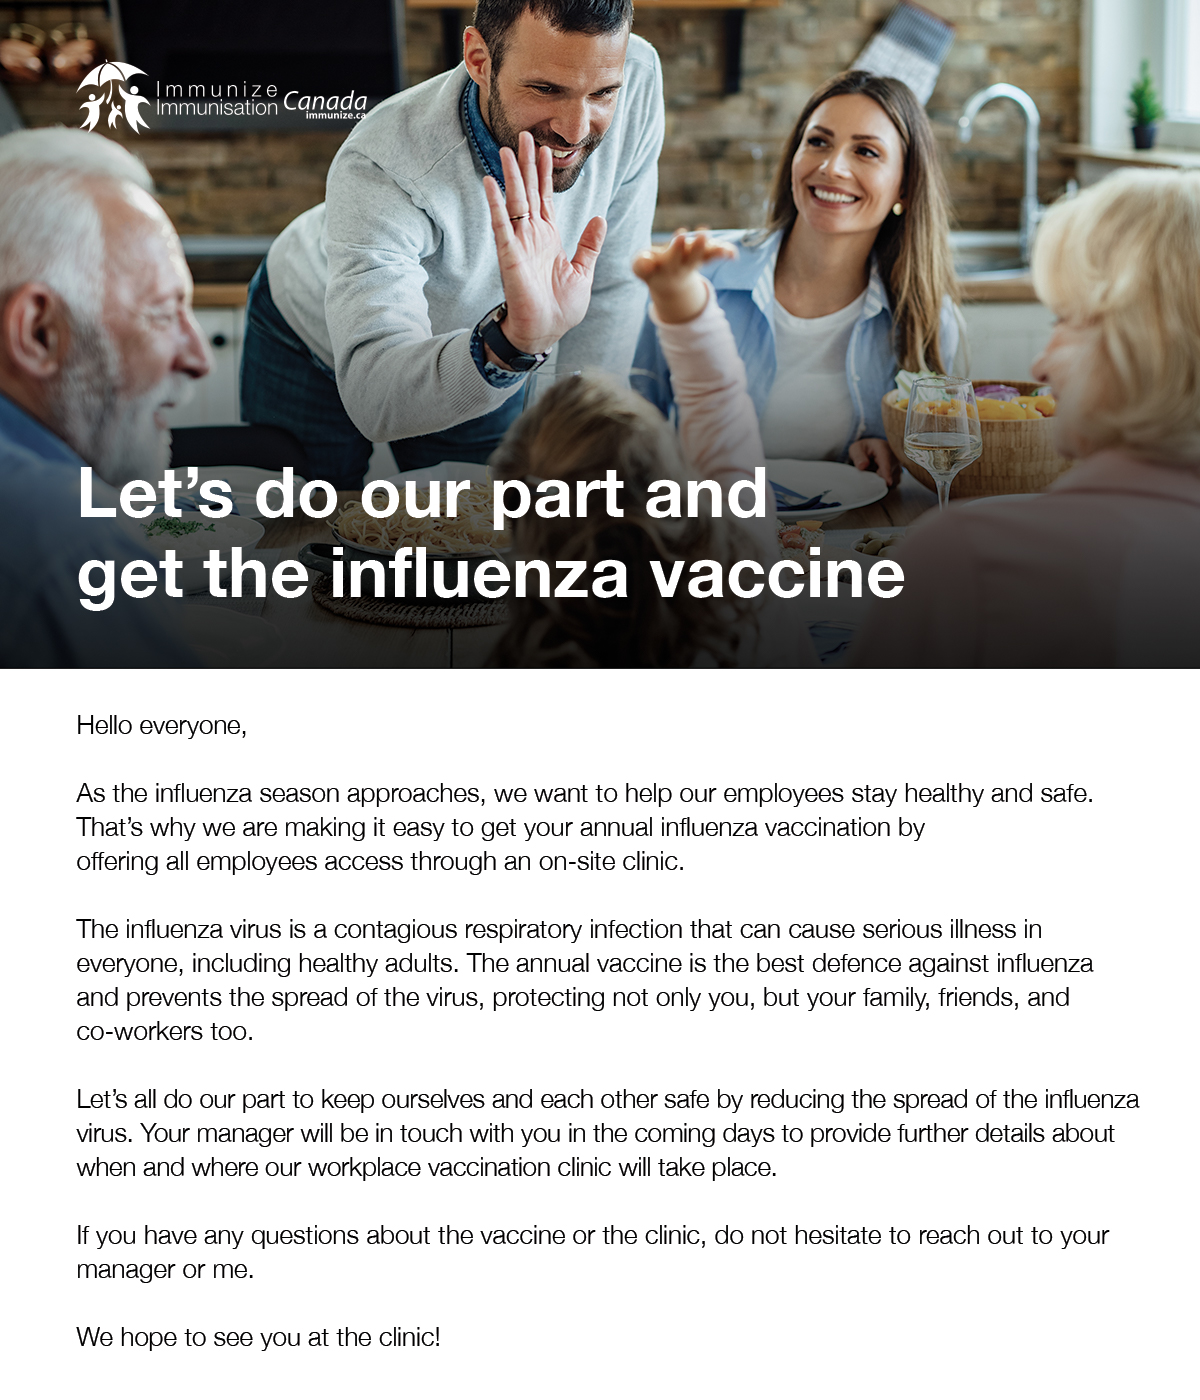 on-site influenza immunization clinic - option 1